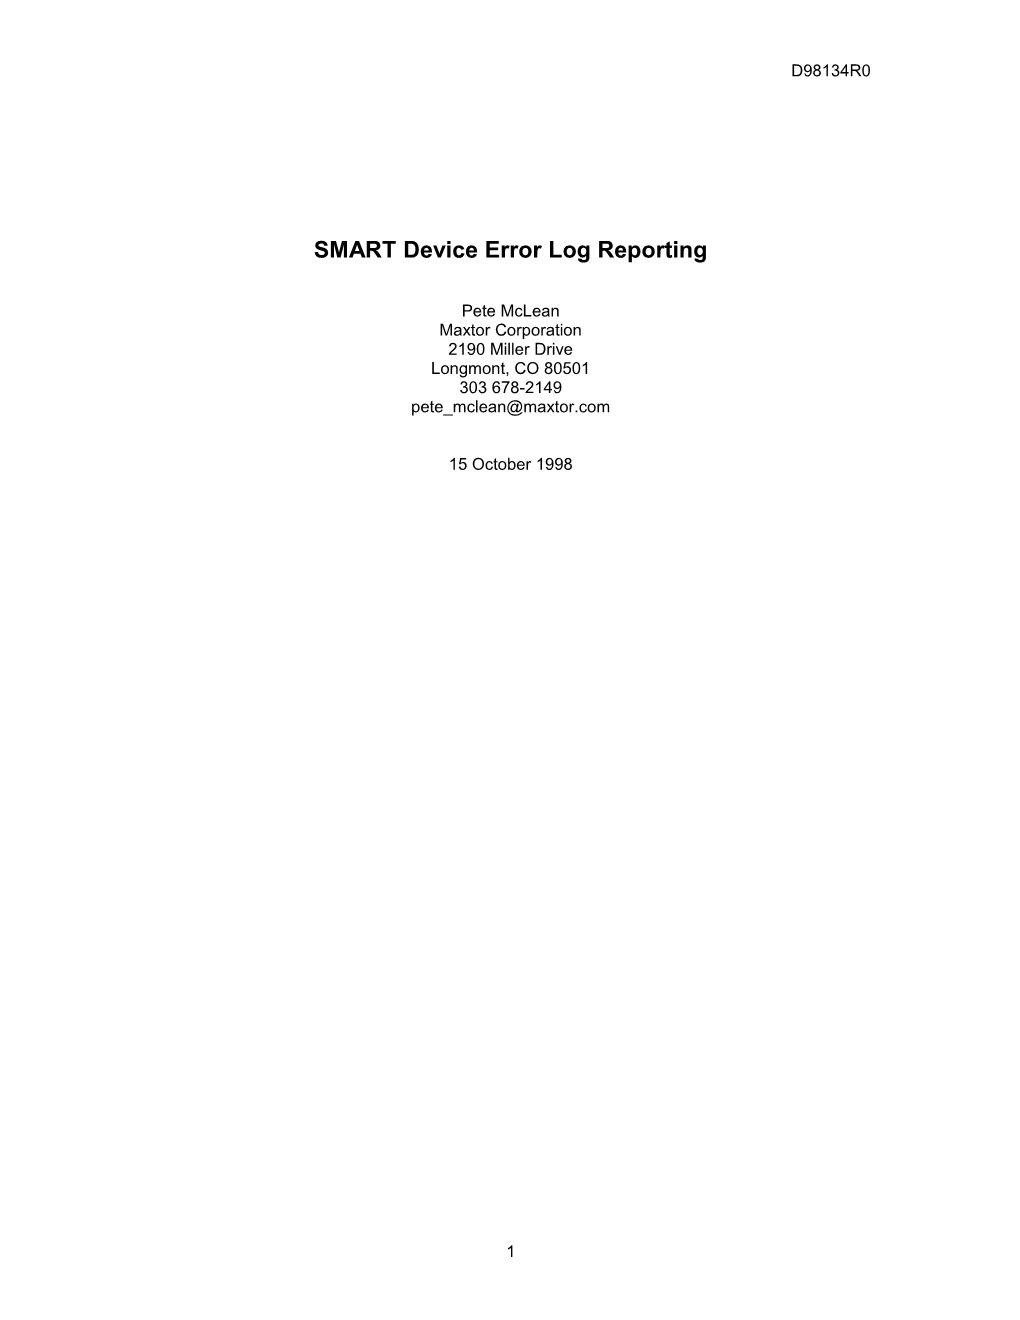 SMART Device Error Log Reporting